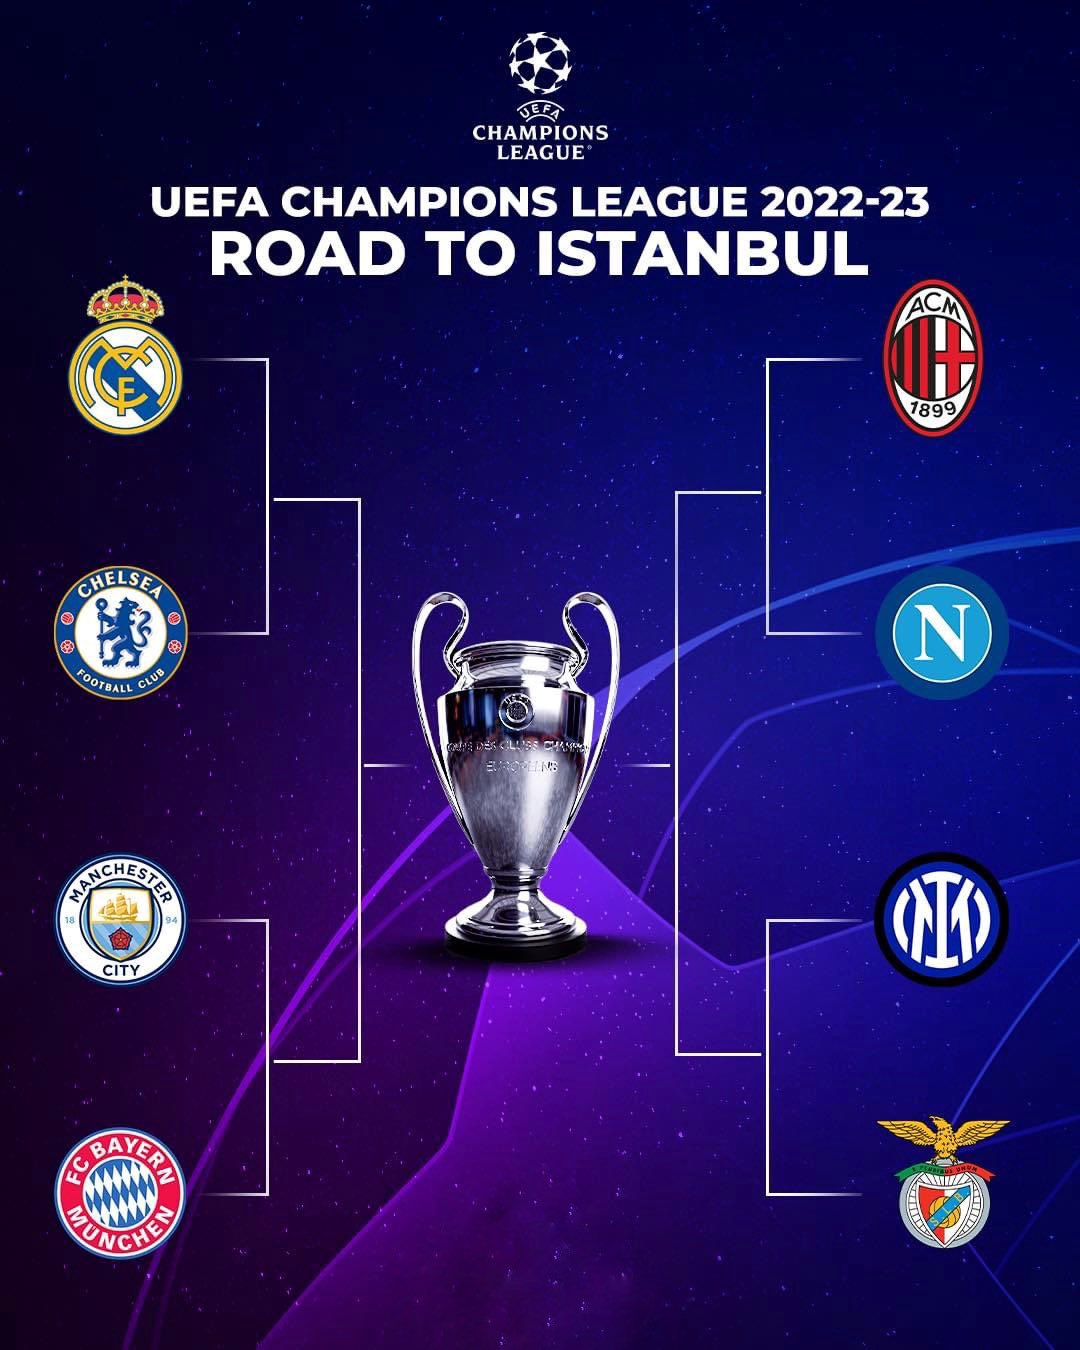 Man City vs Inter, 2022/23 UEFA Champions League Final